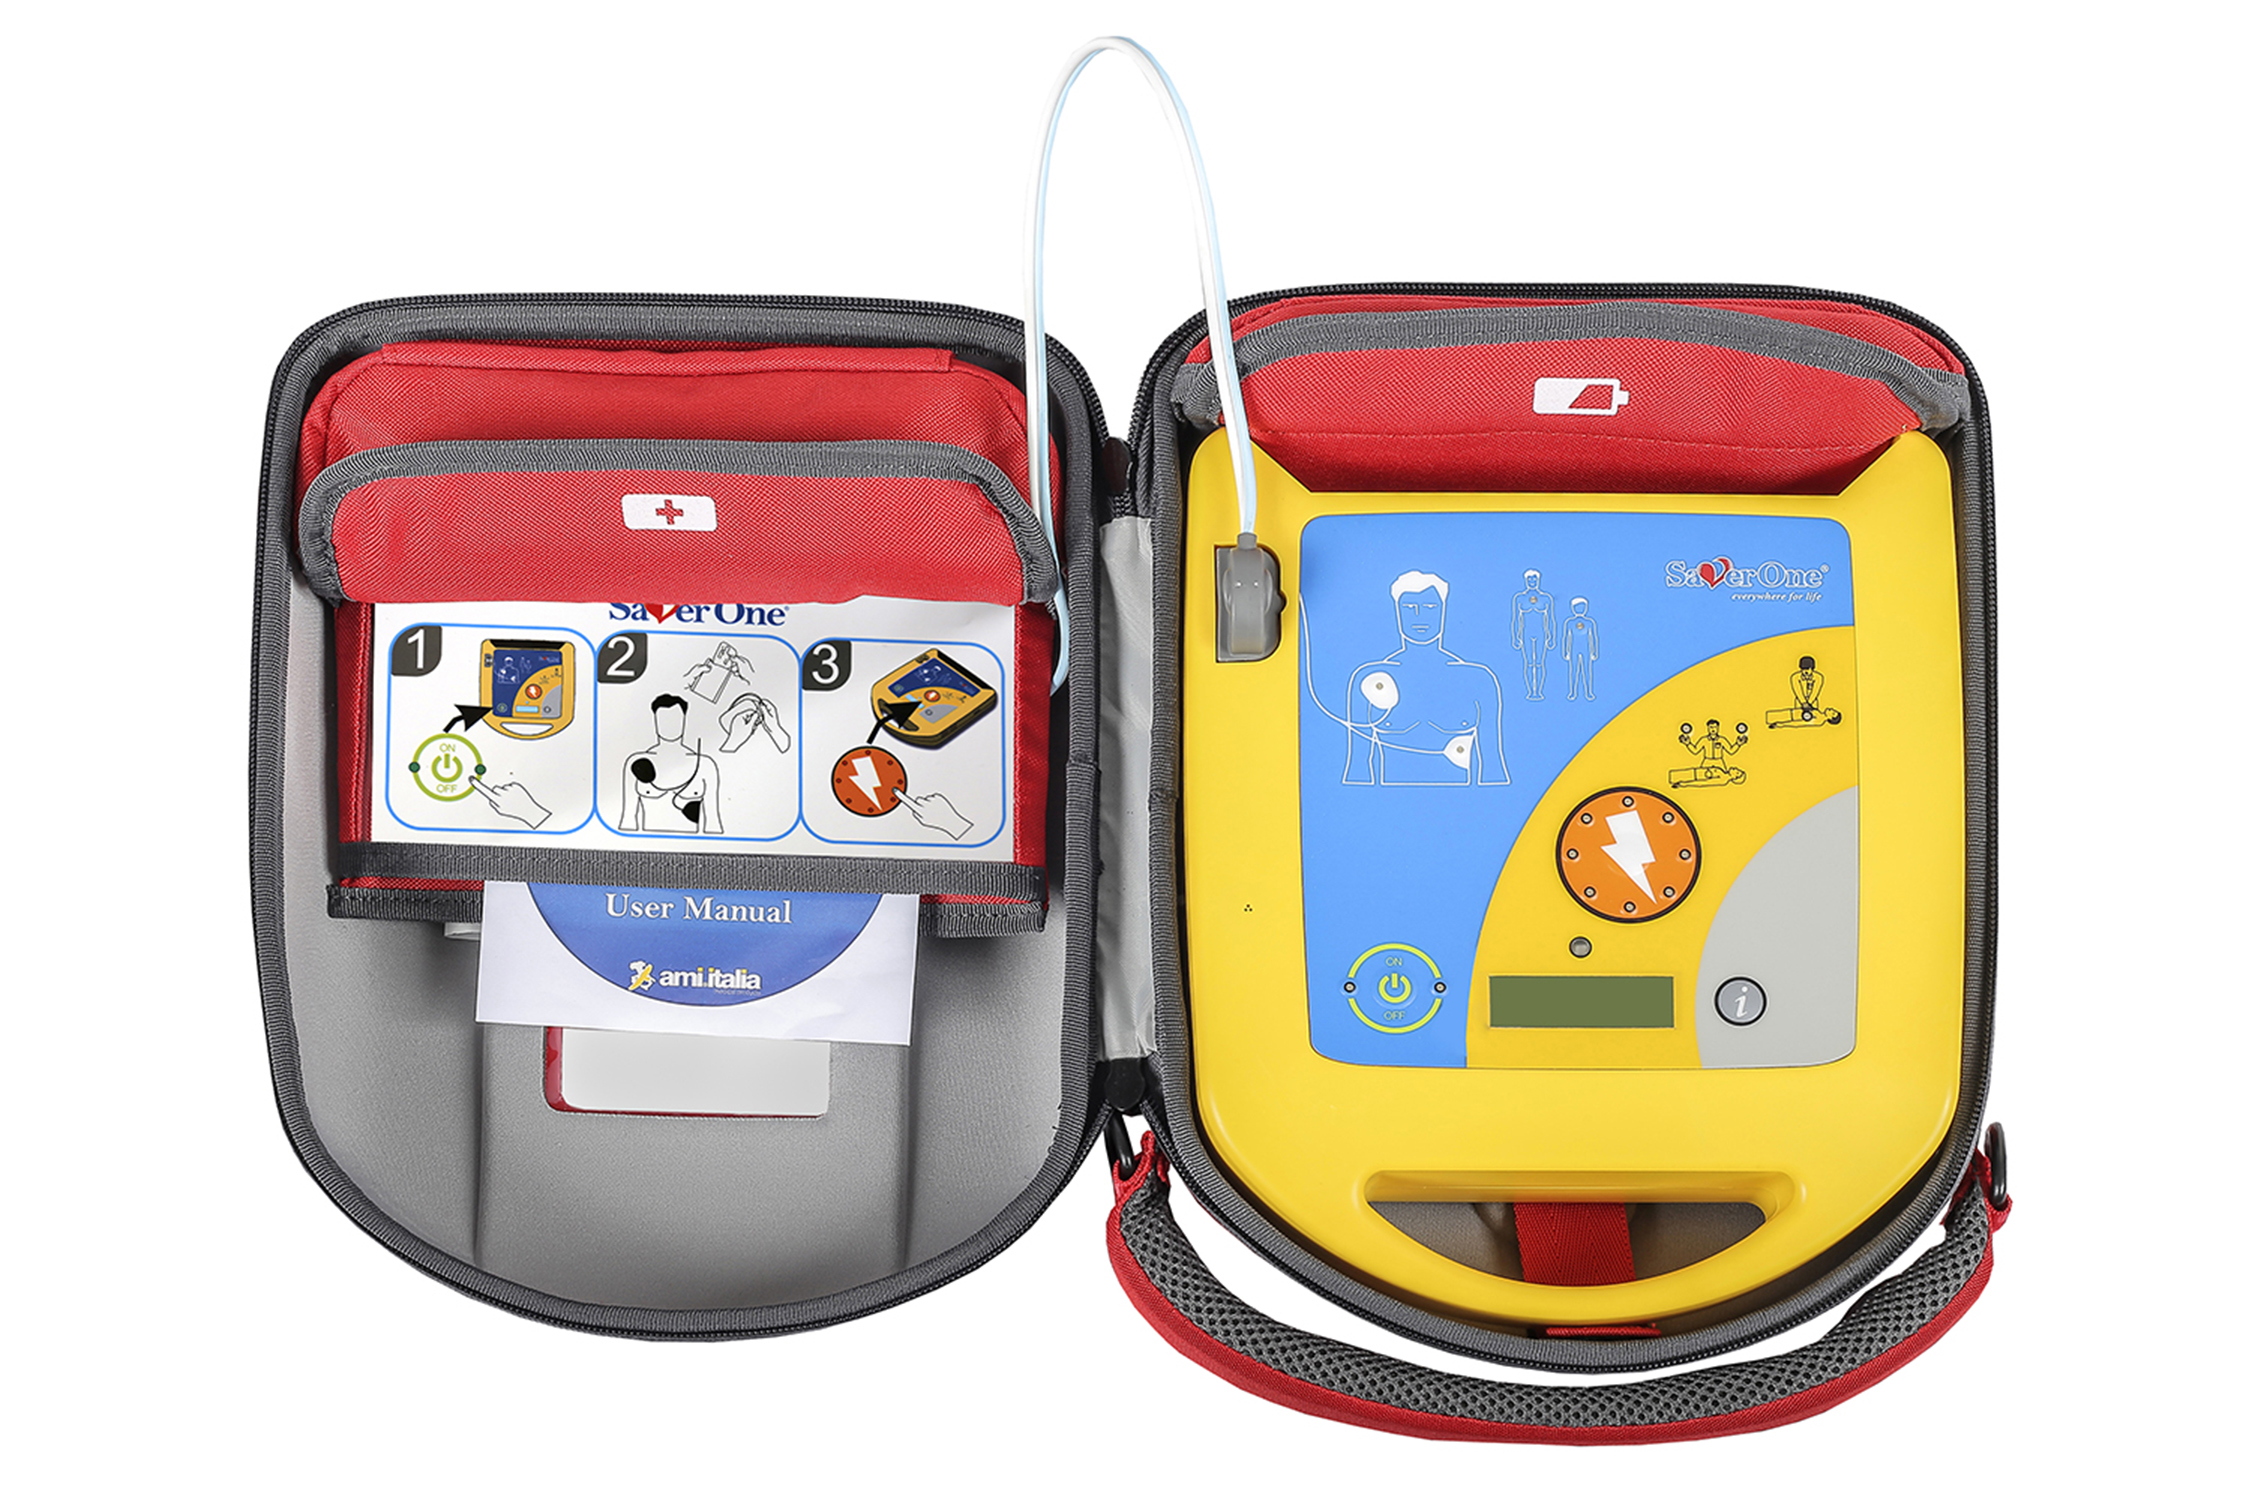 Saver One AED Defibrillator